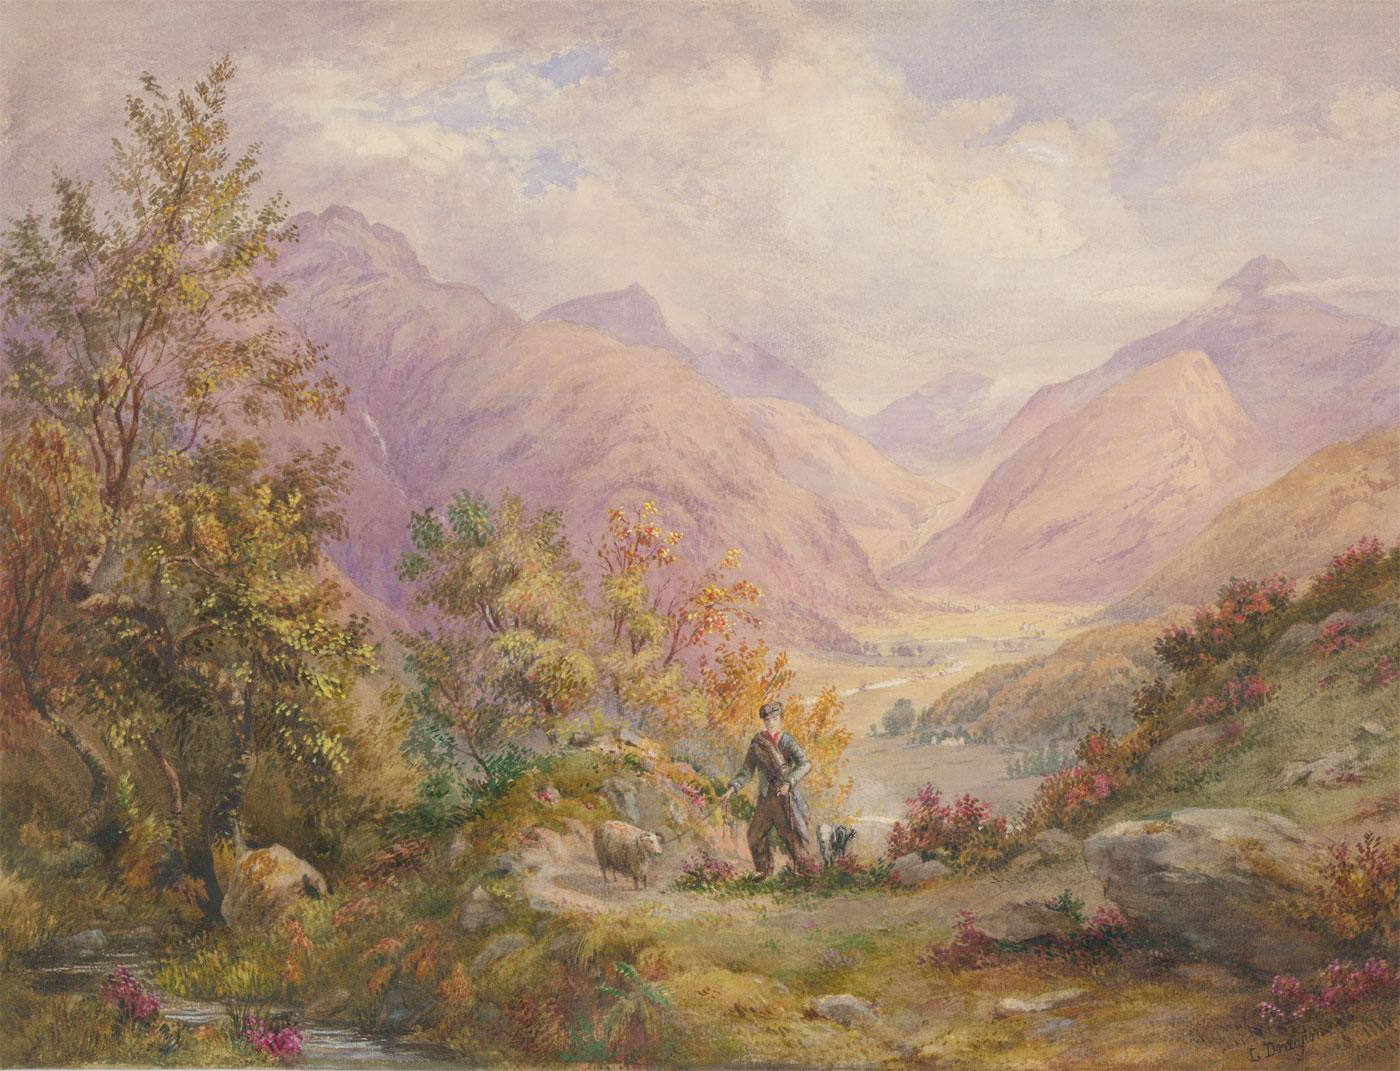 Unknown Landscape Art - L. Drayton - 19th Century Watercolour, Shepherd in the Scottish Hills